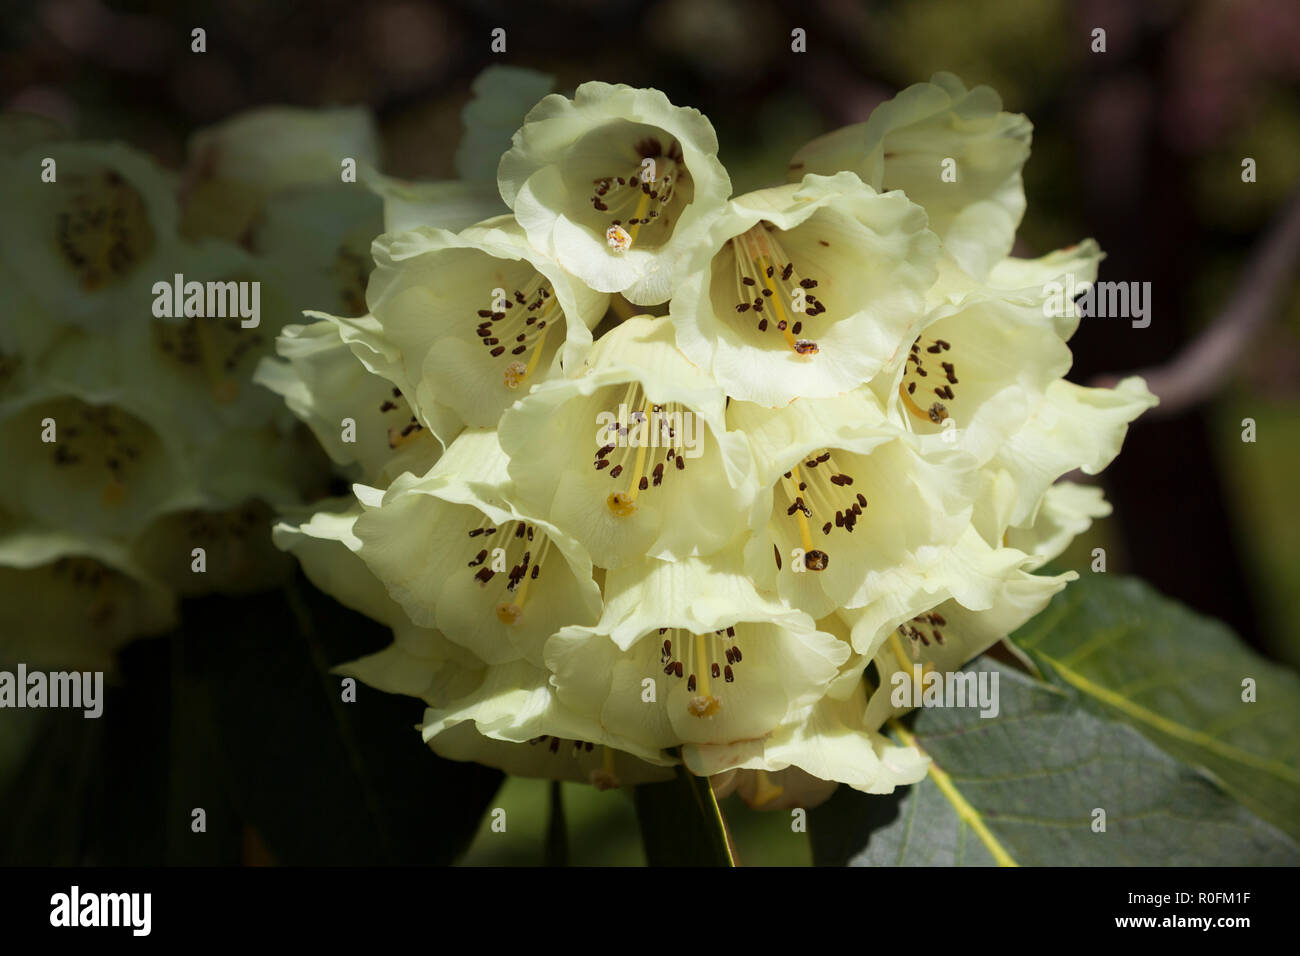 Rhododendron variety Falconeri x Macabeanum in flower Stock Photo